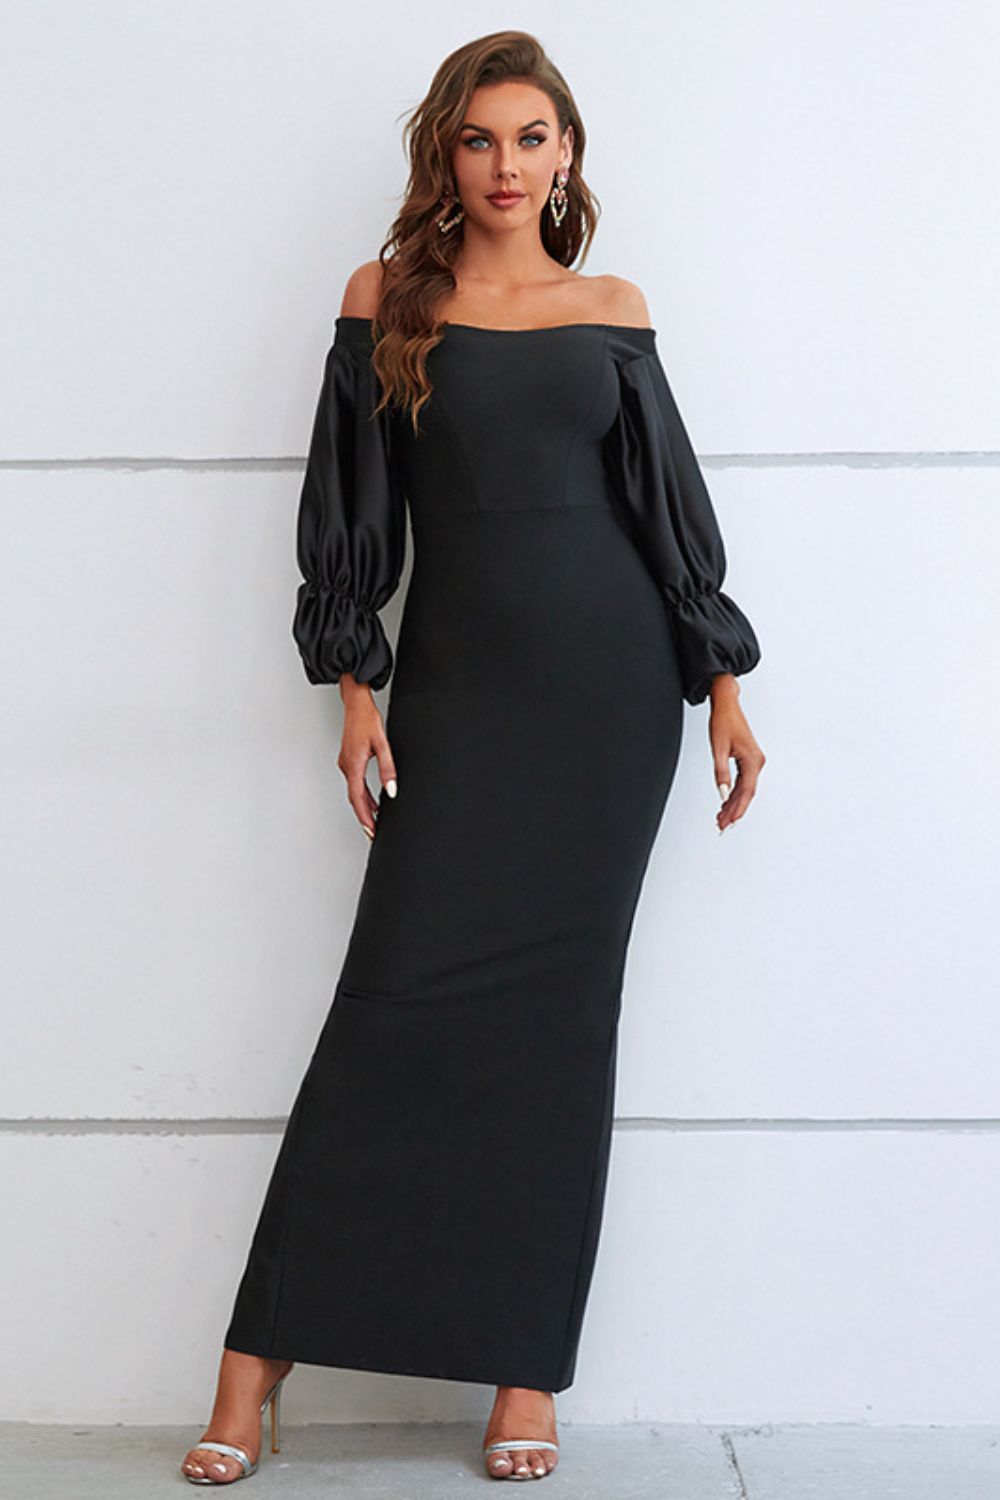 Billow Talk Knit Maxi Dress with Off-Shoulder Bishop Sleeves in Solid Black